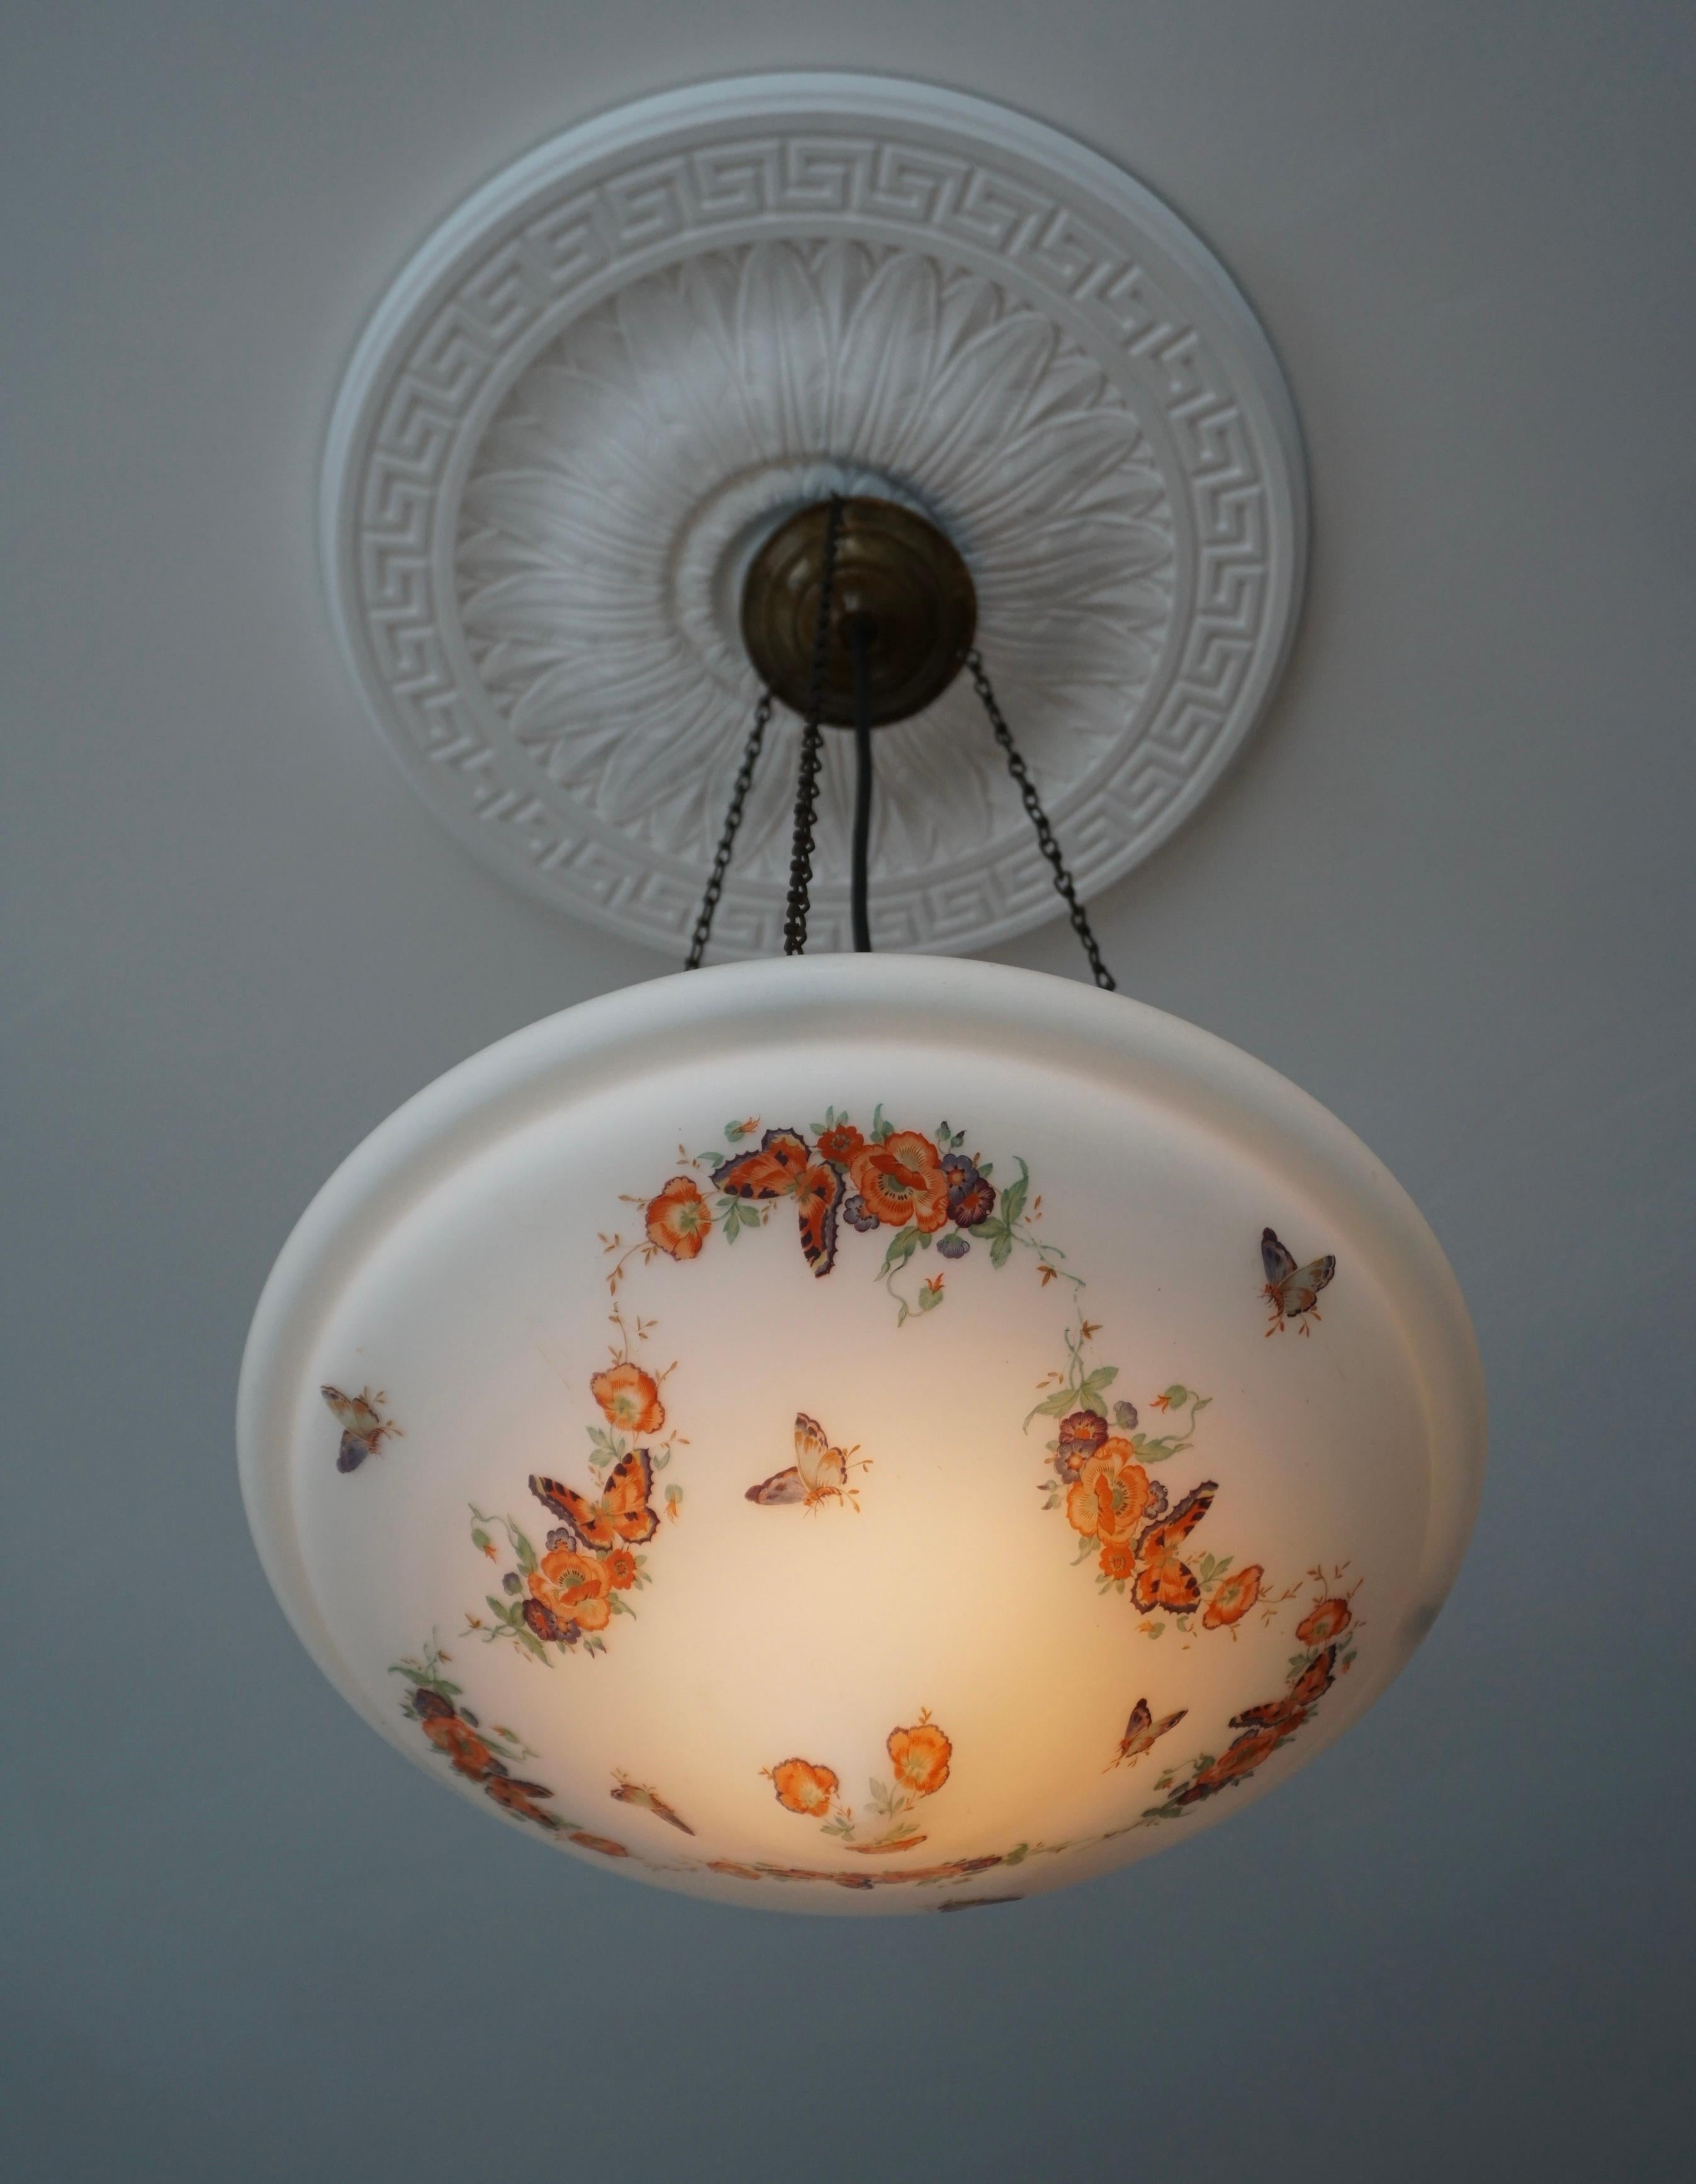 Belgian Art Deco Pendant Light with Floral Motifs and Butterflies